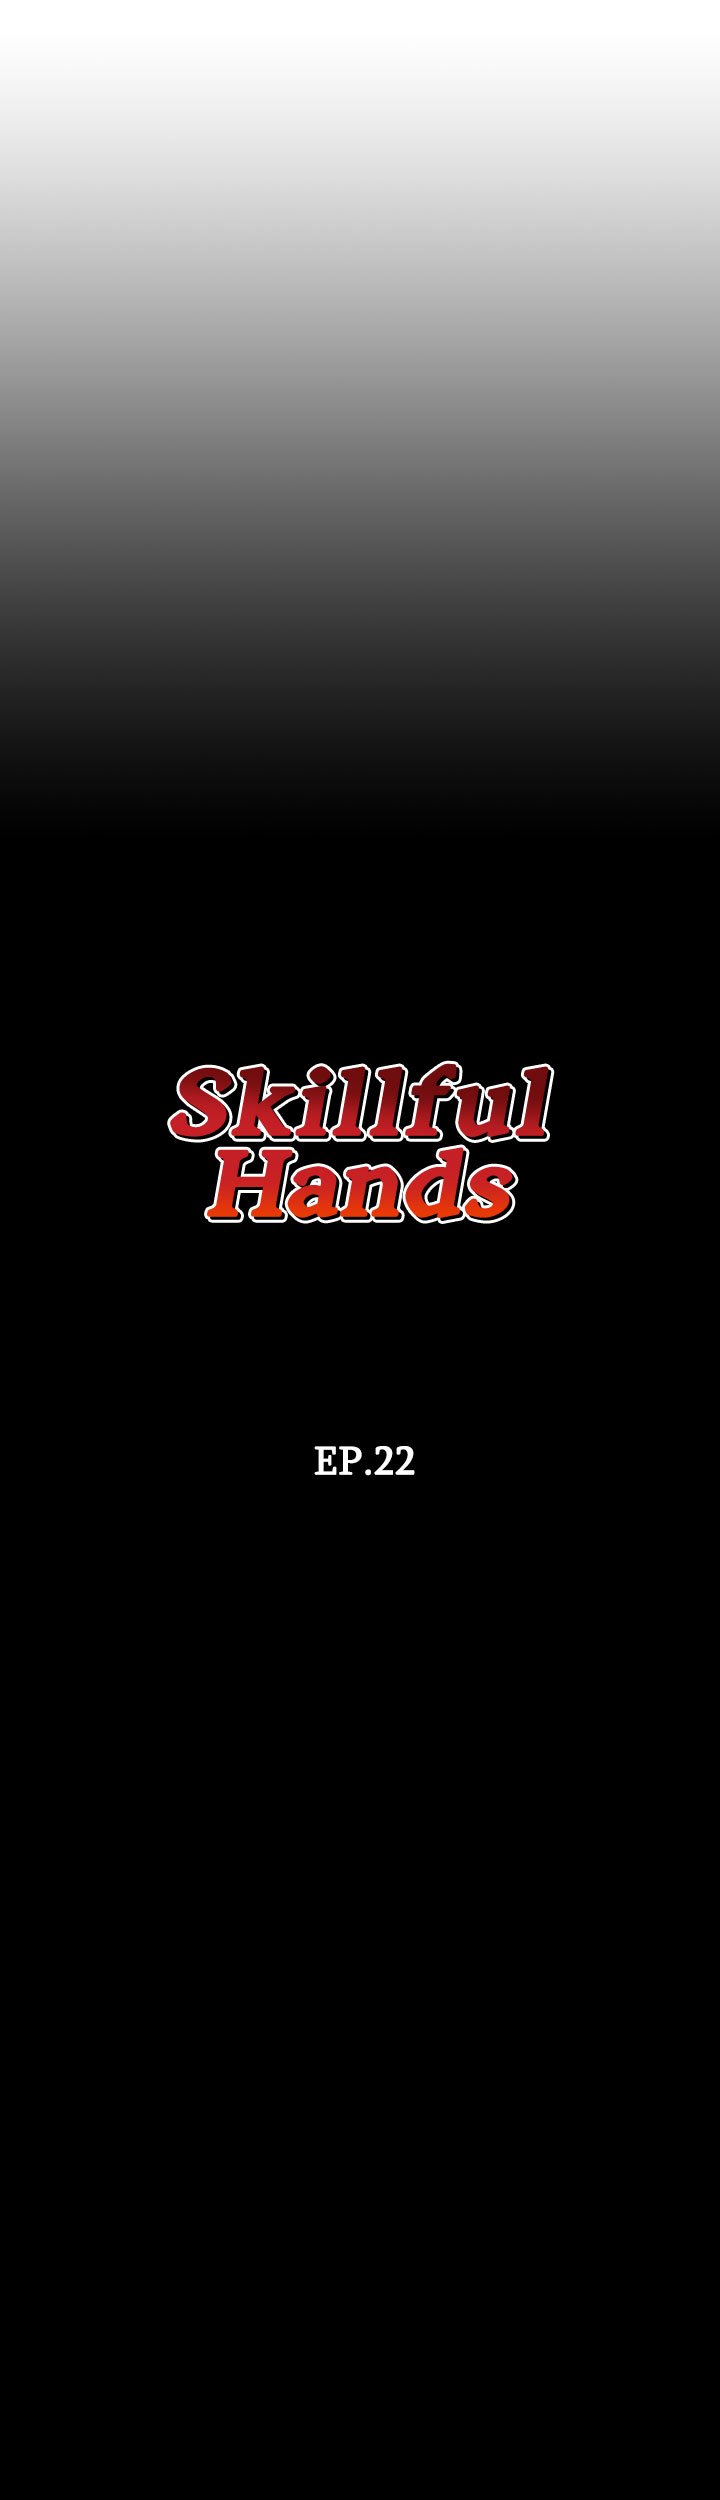 Skillful Hands image